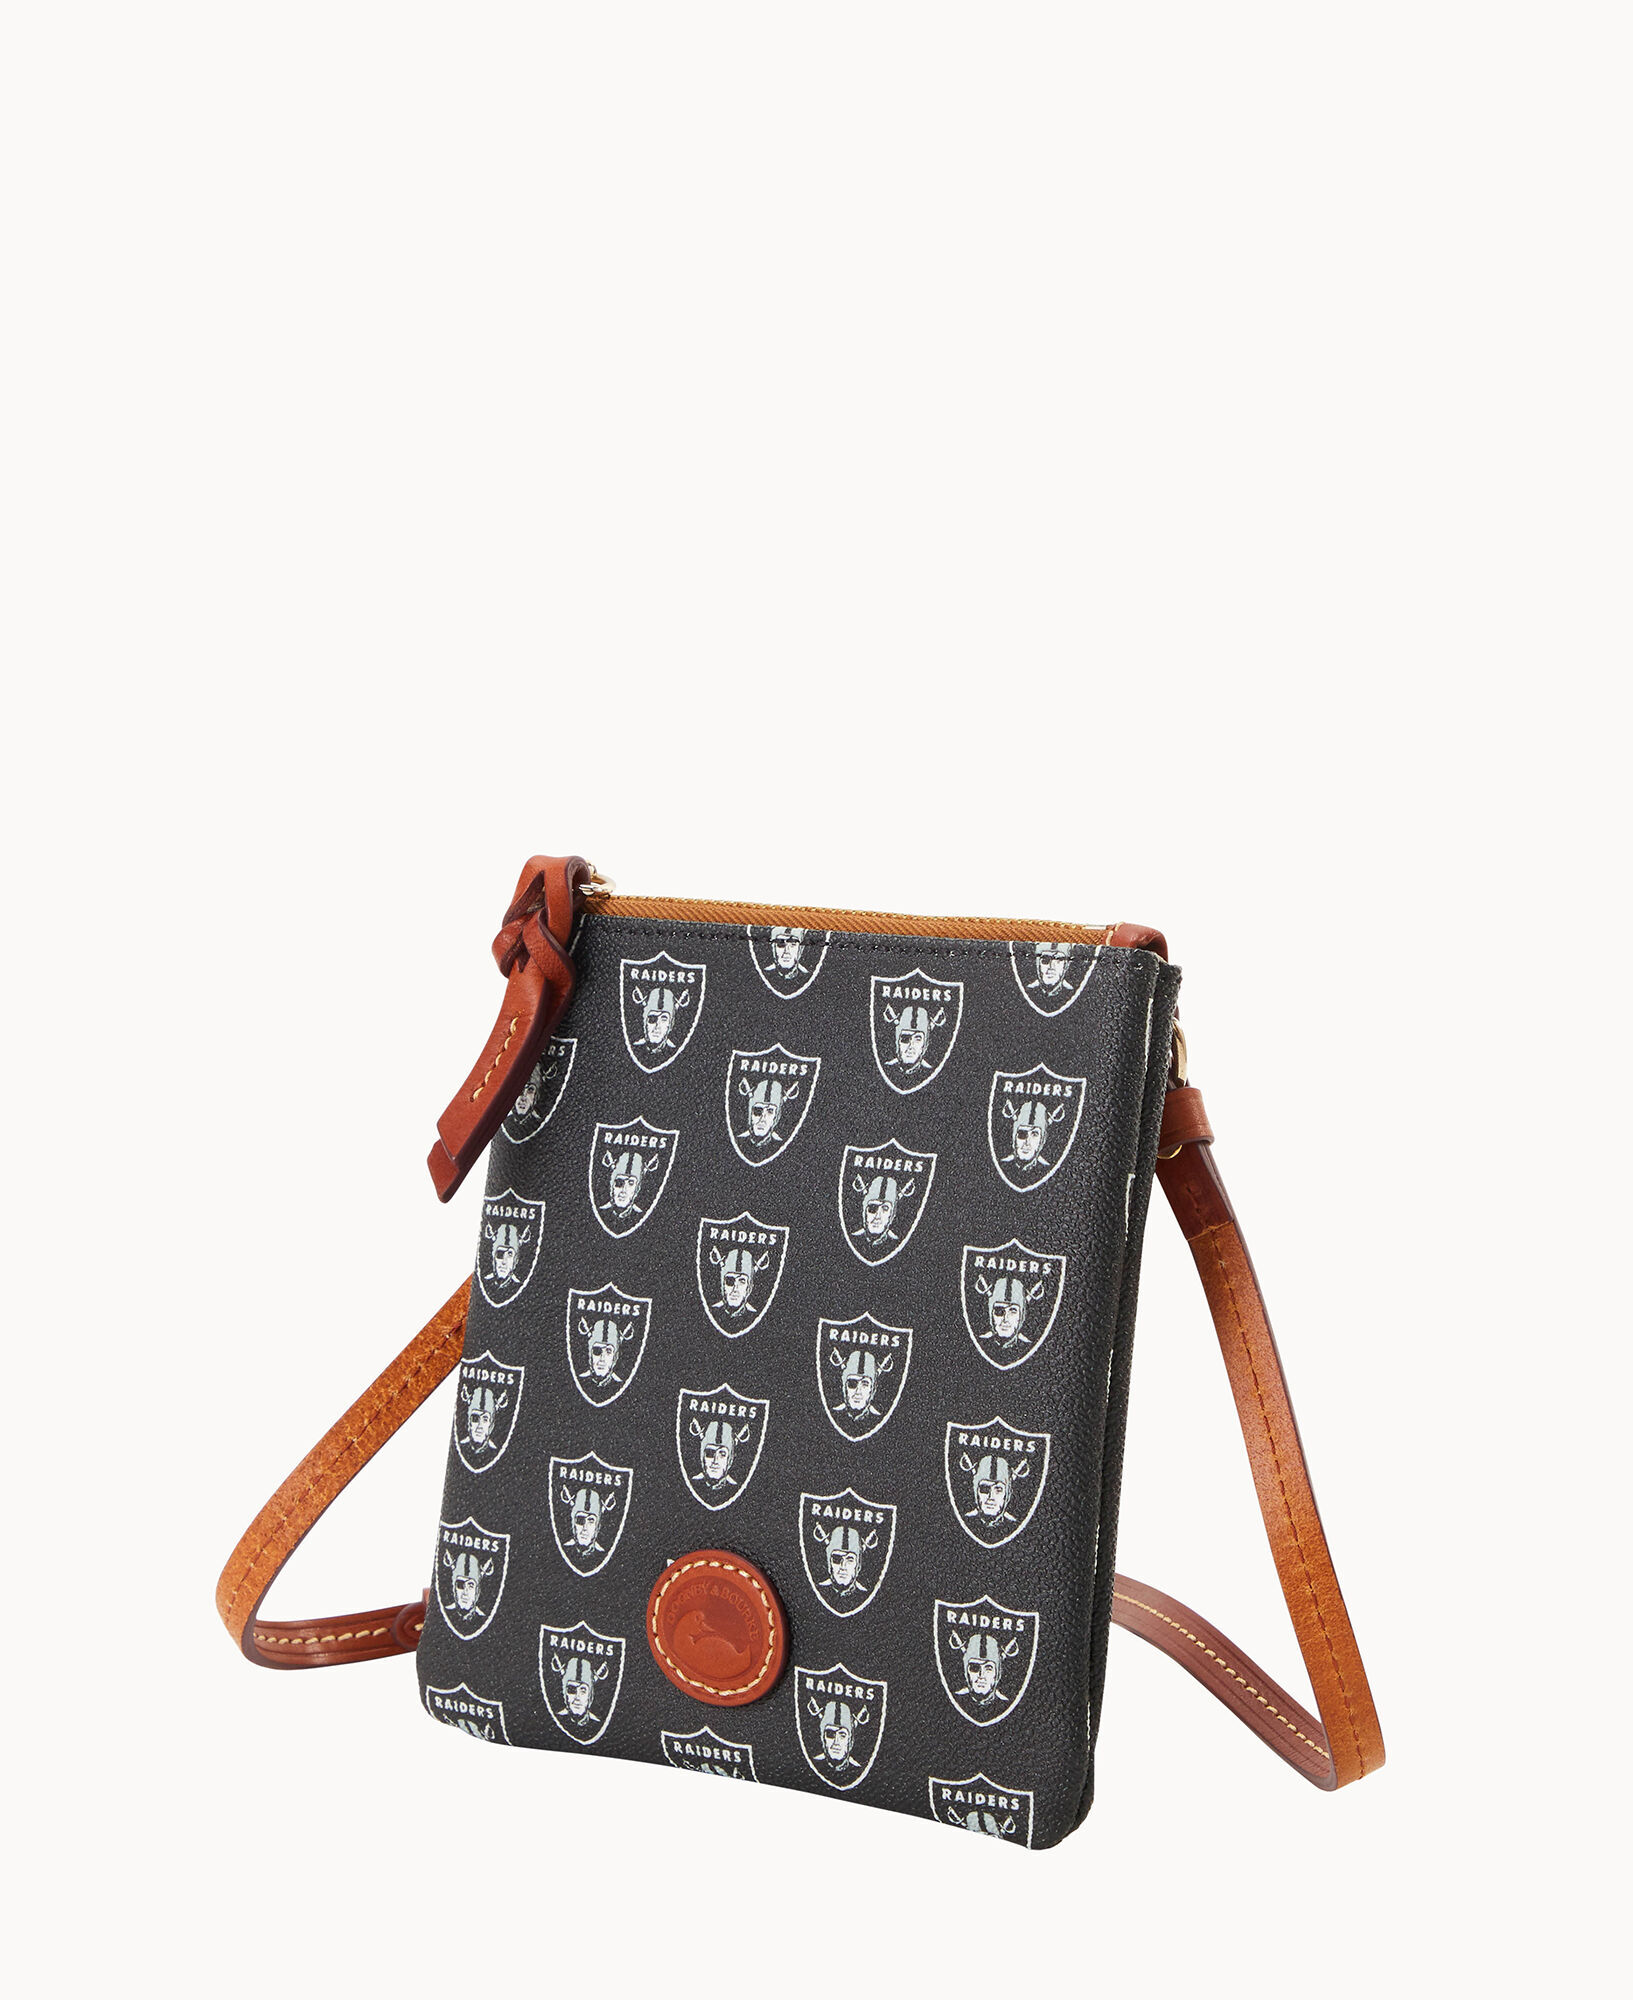 NFL Crossbody Bags